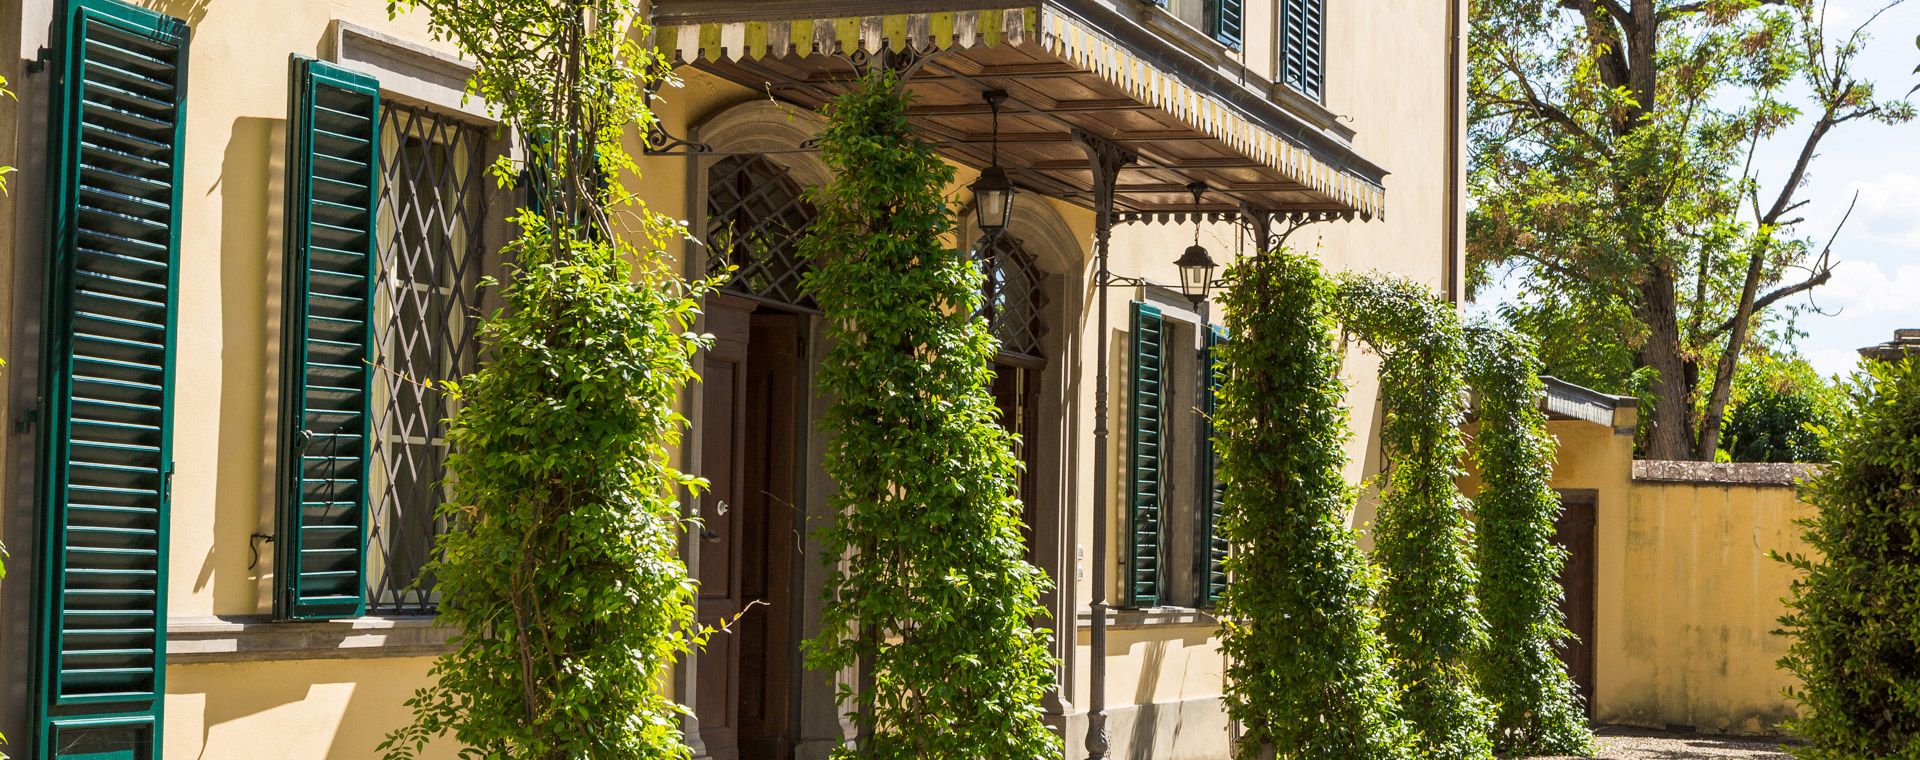 Historical Italian villa with park for sale